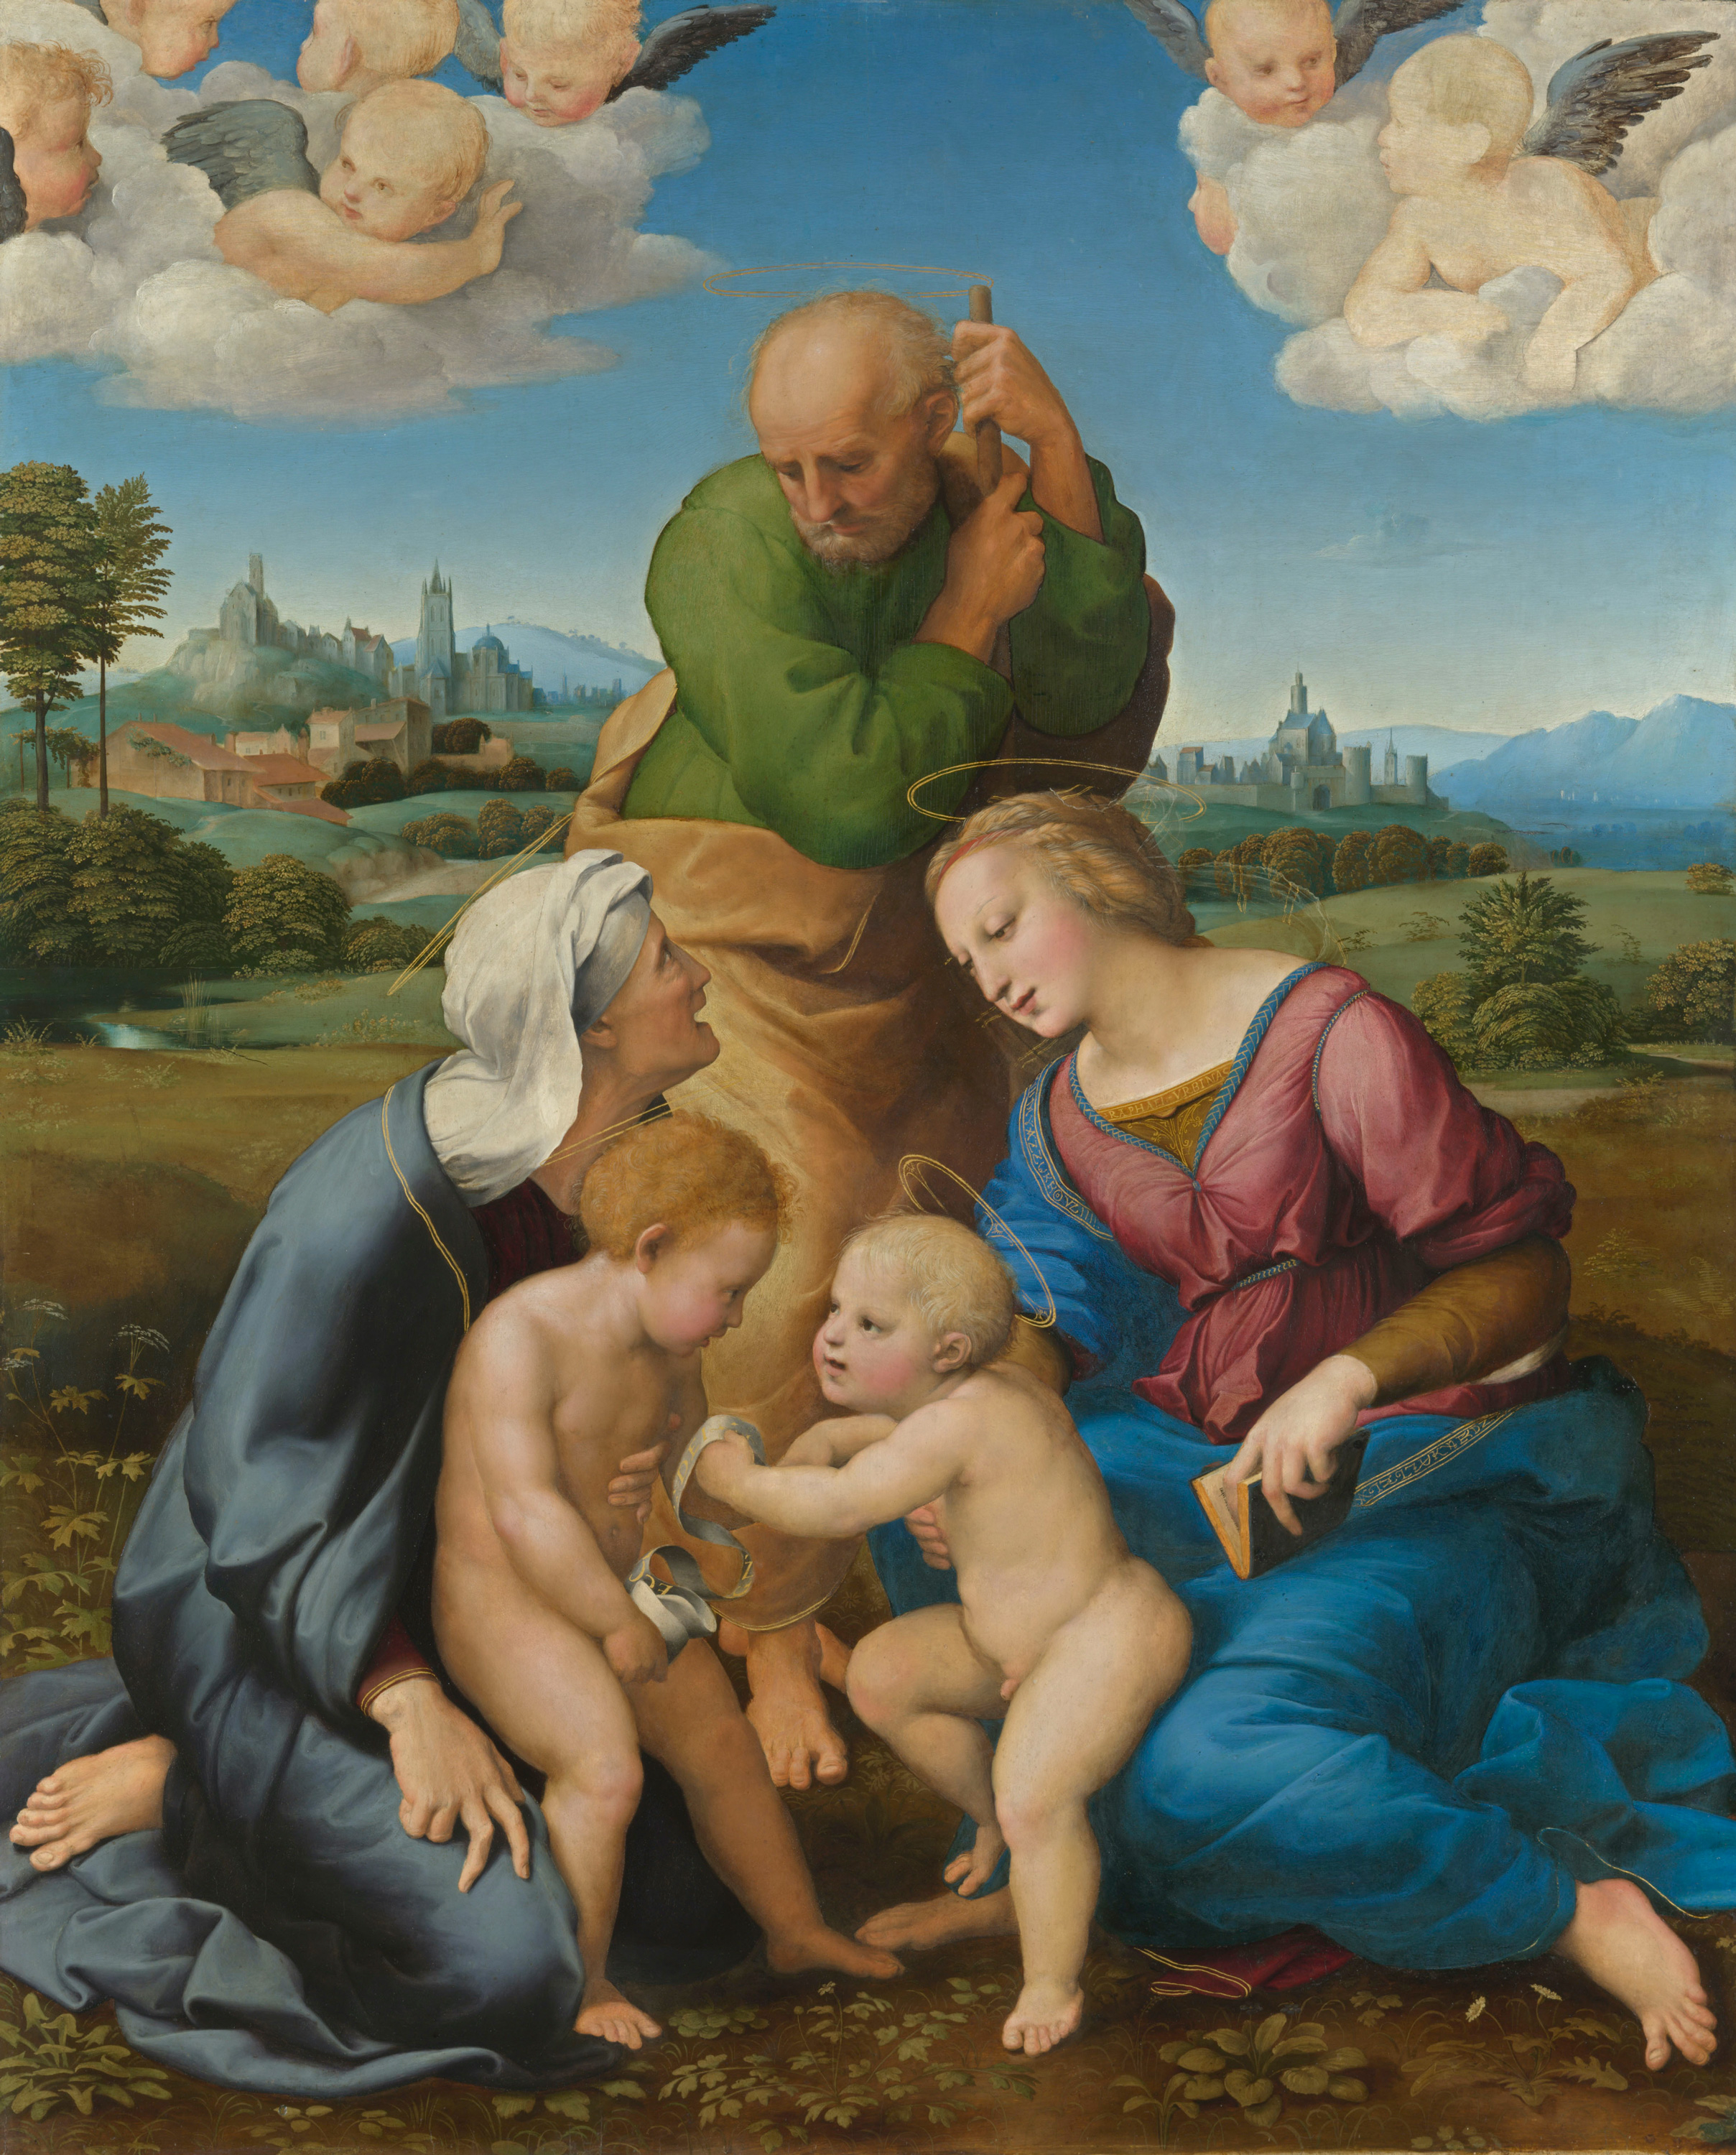 Canigiani Holy Family by Raphael Santi - 1505/1506 - 131 x 107 cm Alte Pinakothek